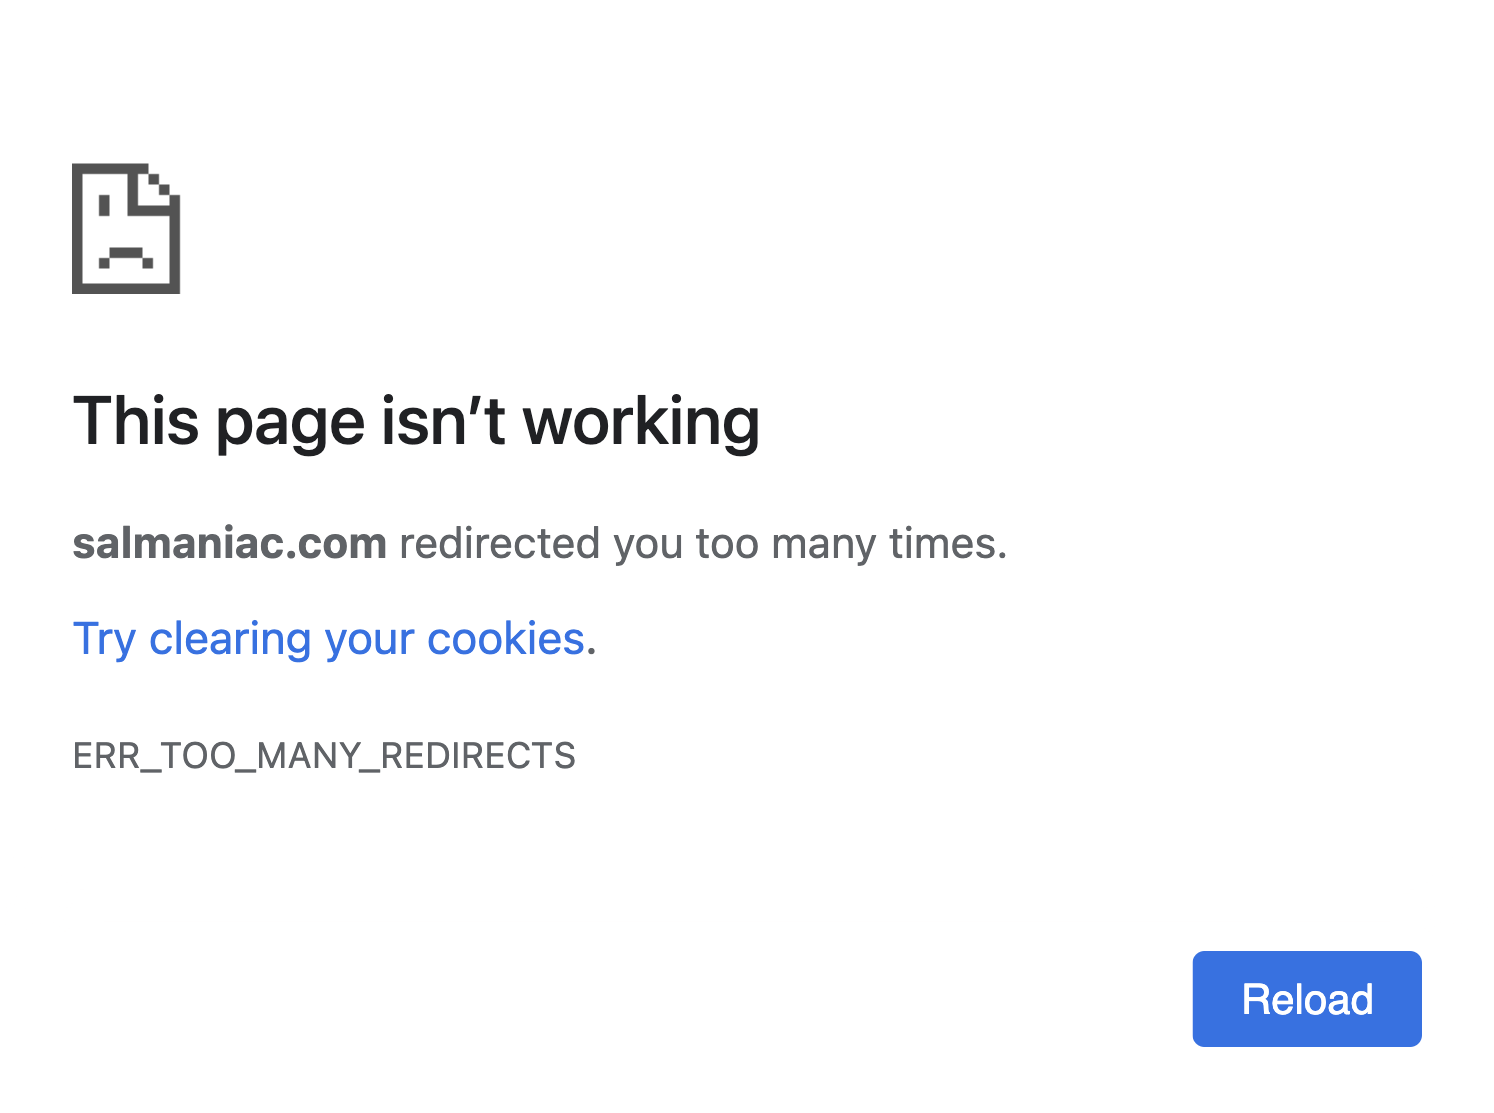 ERR_TOO_MANY_REDIRECTS error in Chrome